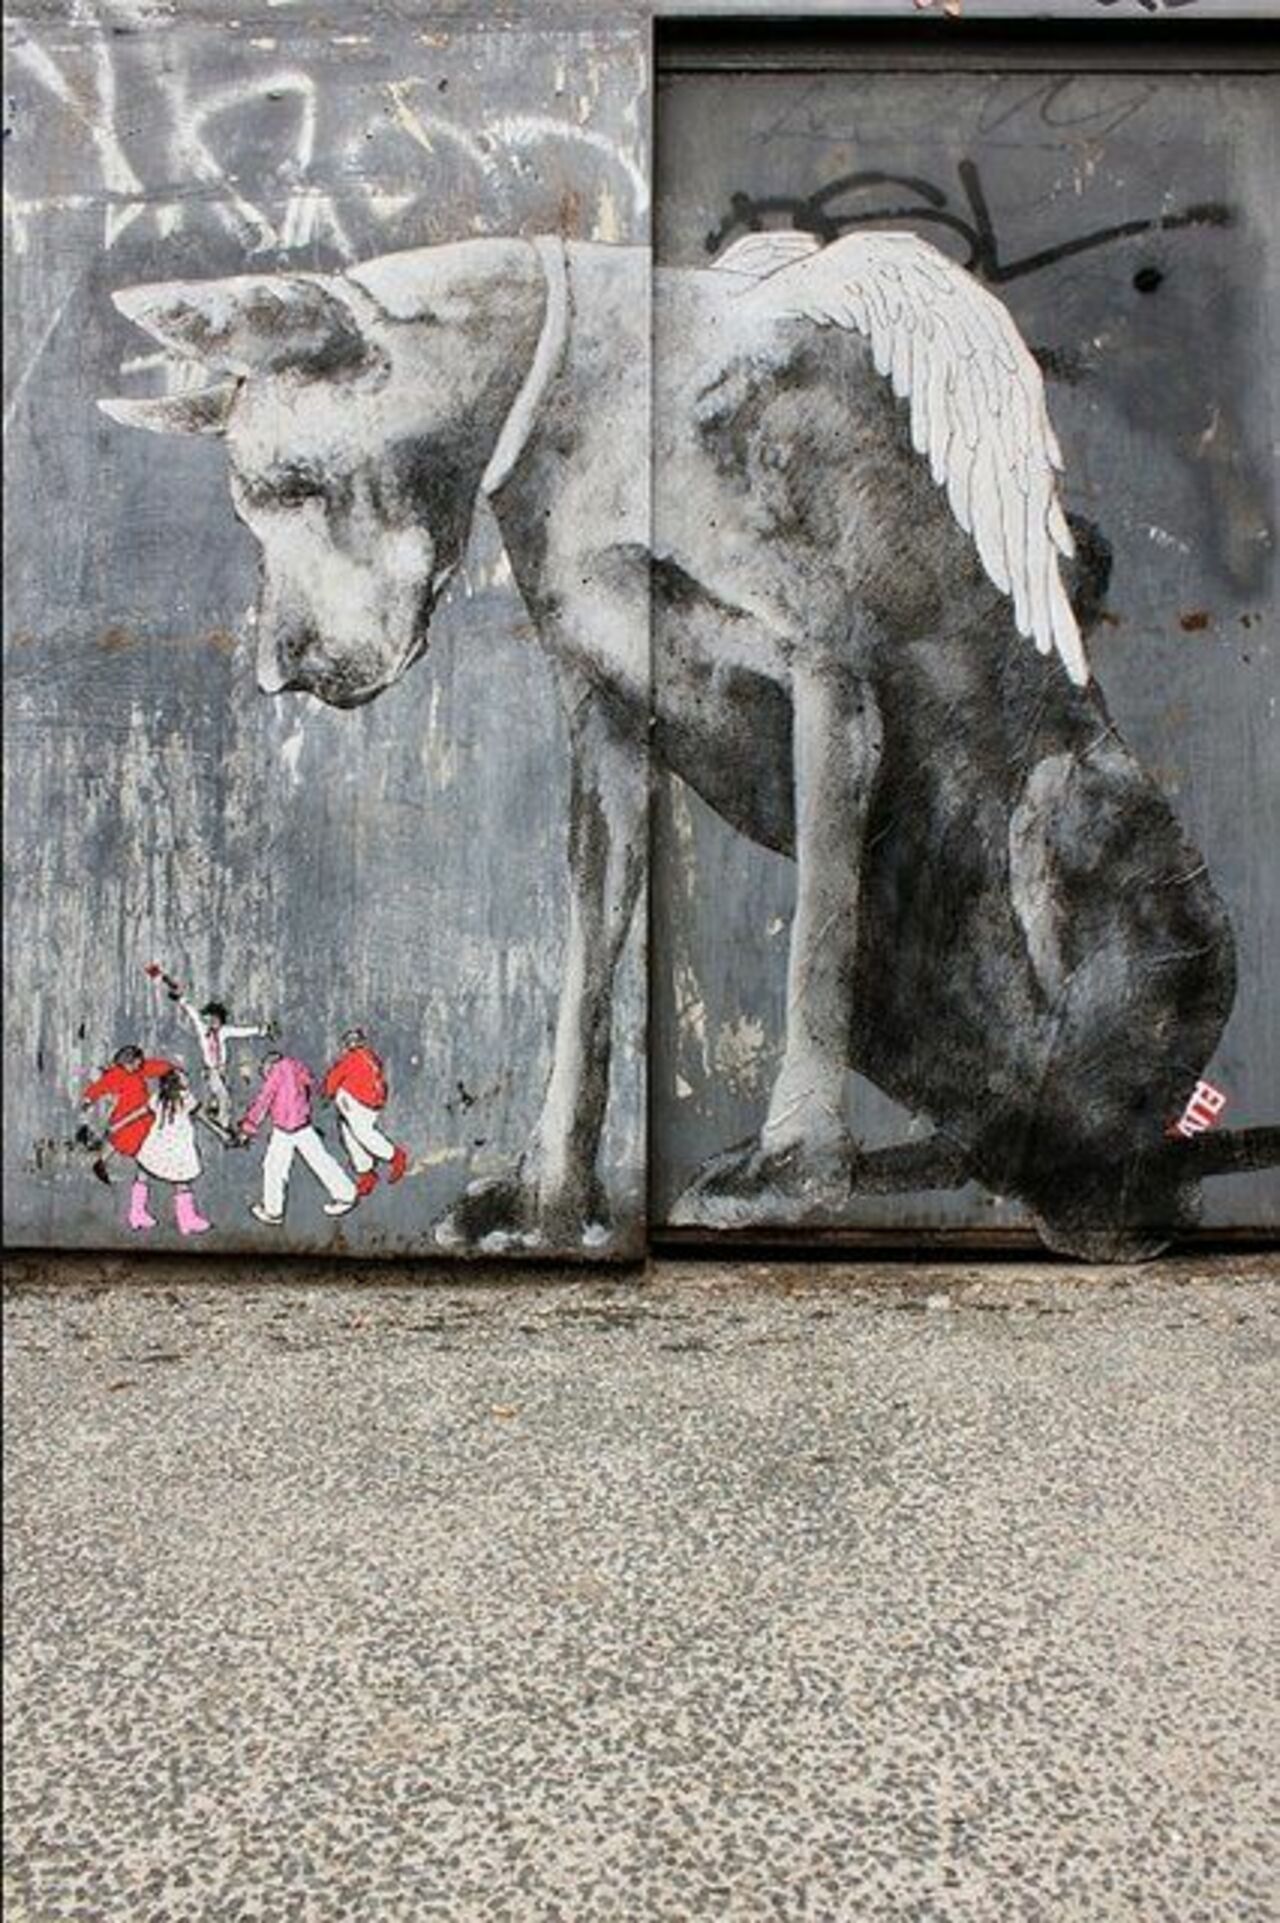 RT @Dame_Rouge: .@StreetArtBuzz - Le chien ange gardien par #Ella #StreetArt #UrbanArt #Graffiti http://t.co/uEJFdH5Ip9